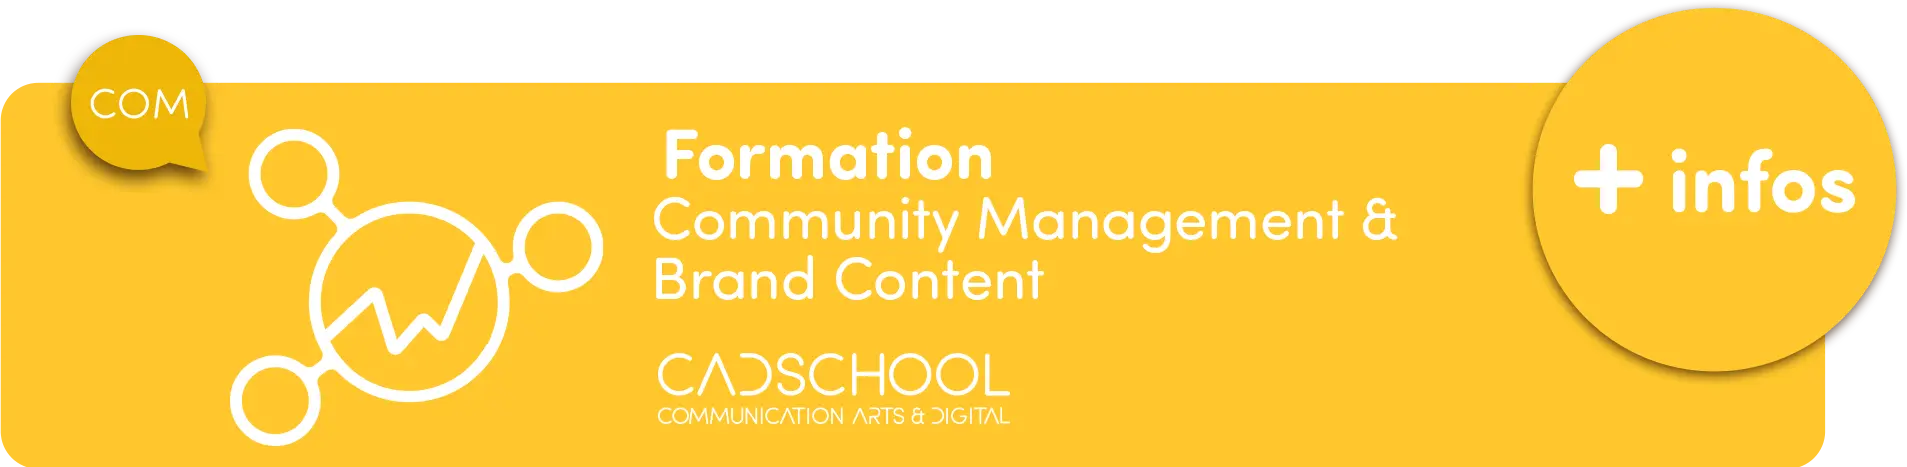 Formation Community Management & Brand Content